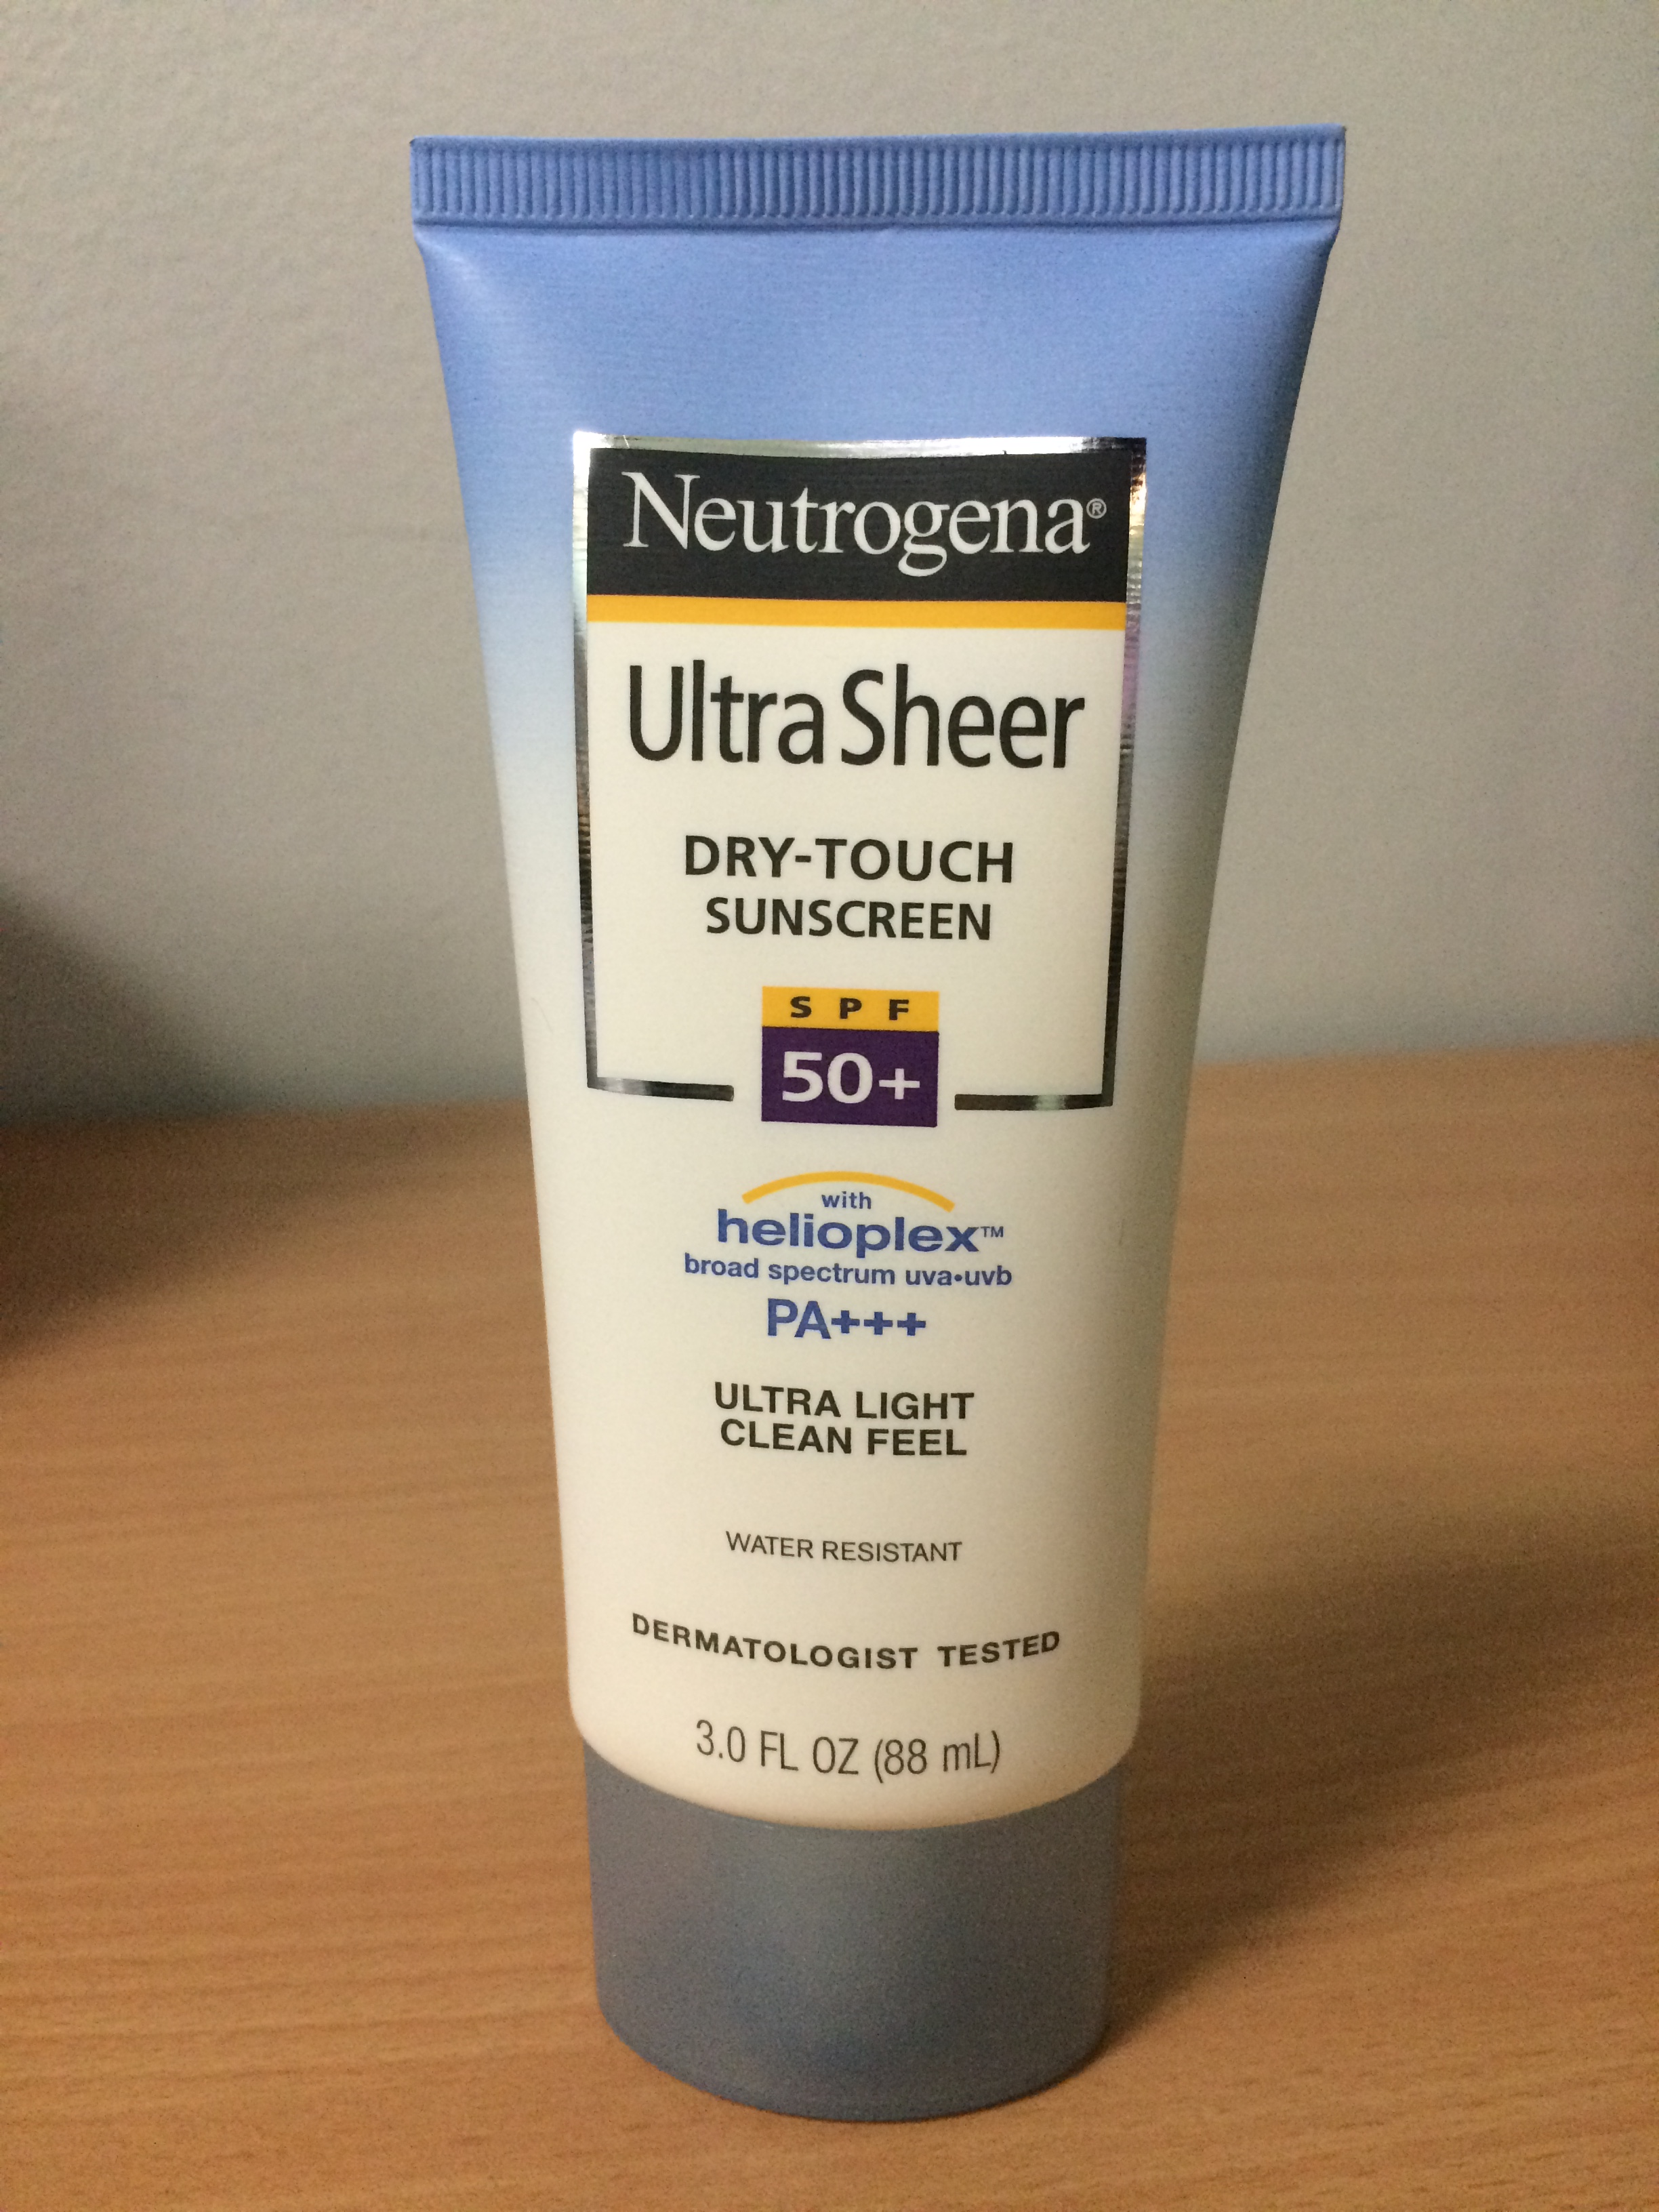 Neutrogena Ultra Sheer Dry Touch Sunblock SPF 50+